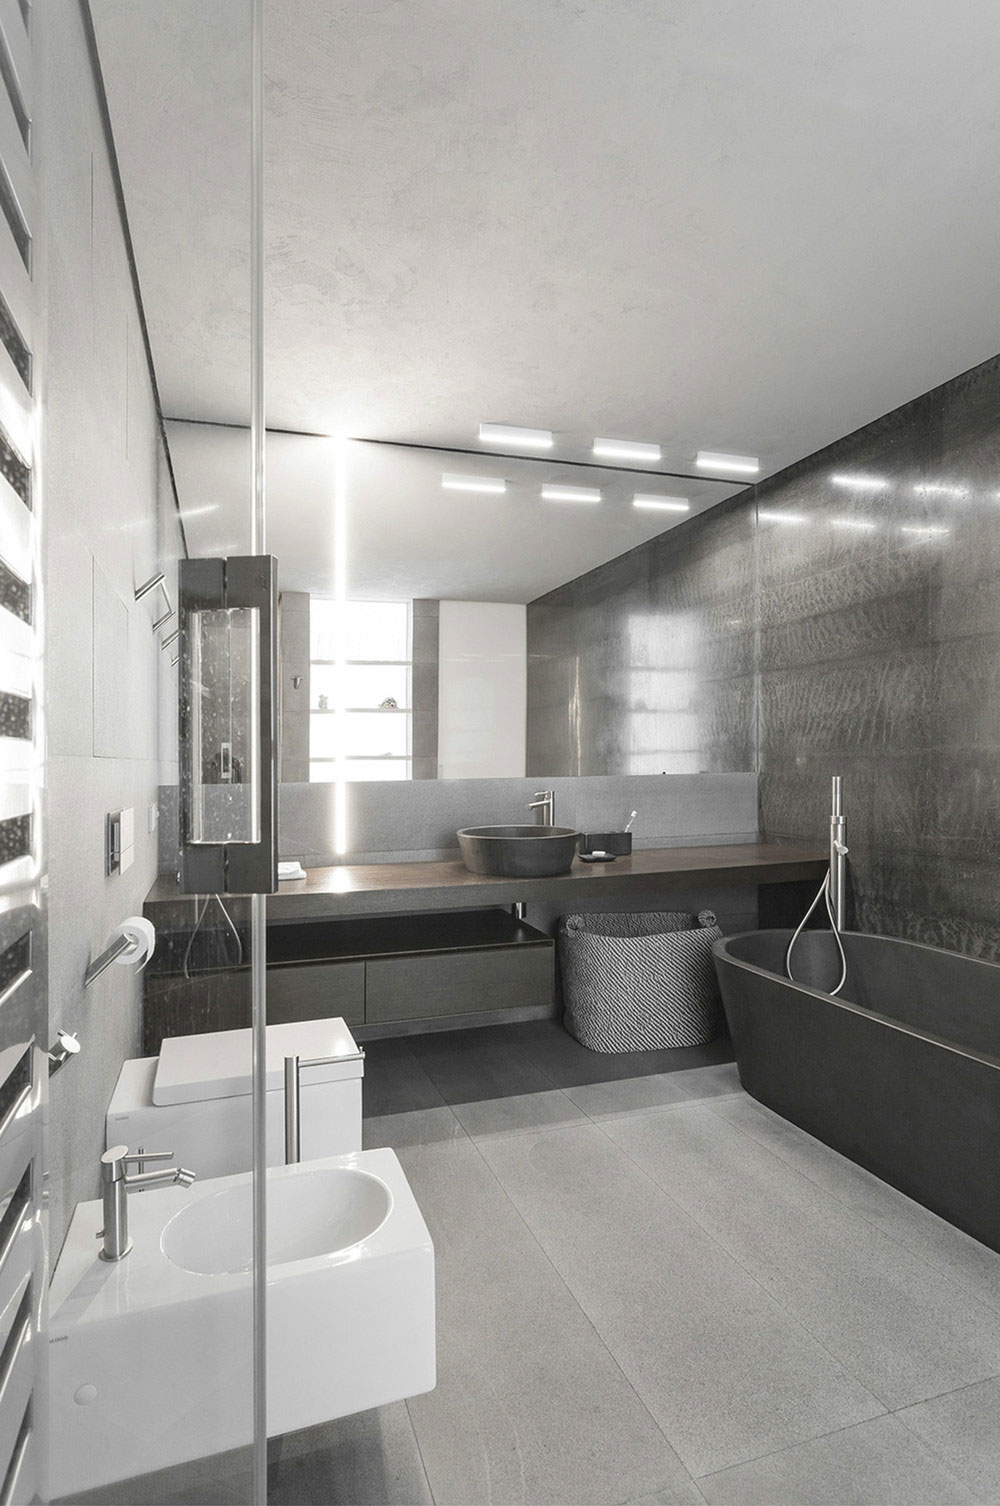 Laminating Floor With Gray Bathtub Large Mirror Gray Wash Stand Sink And Teeth Brush Elegnace White Sink Lighting Gray Wall For Small Bathroom Design Ideas Bathroom